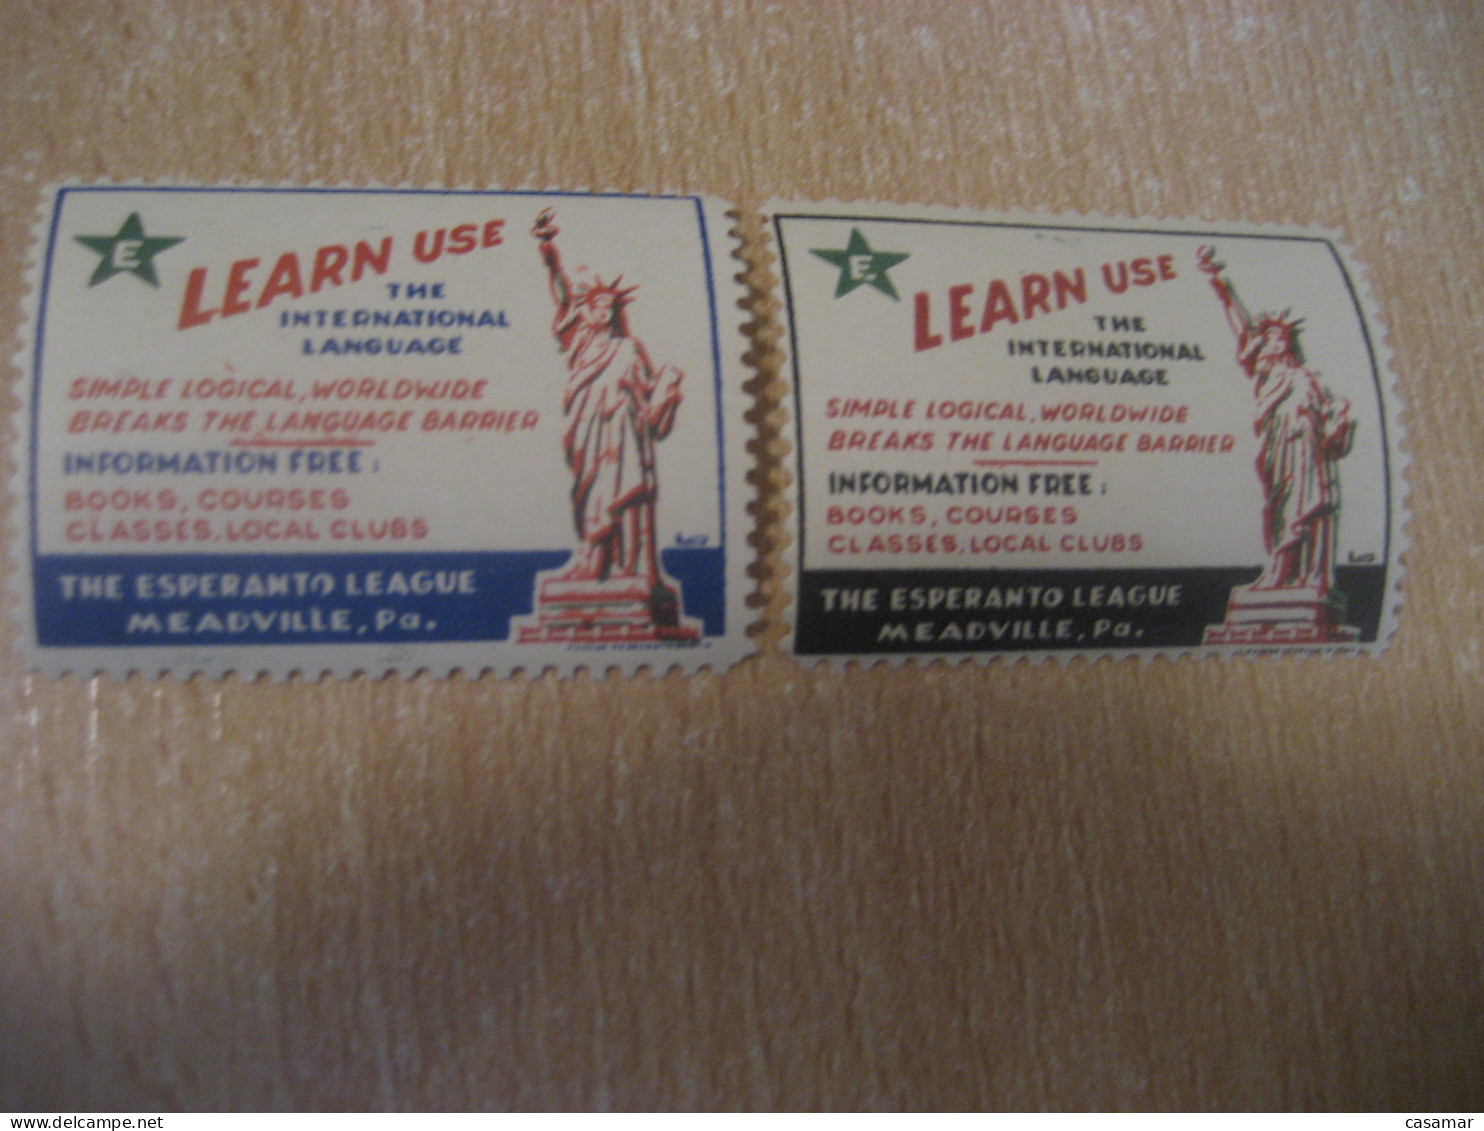 MEADVILLE PA Esperanto Liberty Statue Learn Language Architecture Perforated 2 Poster Stamp Vignette USA Label - Esperanto